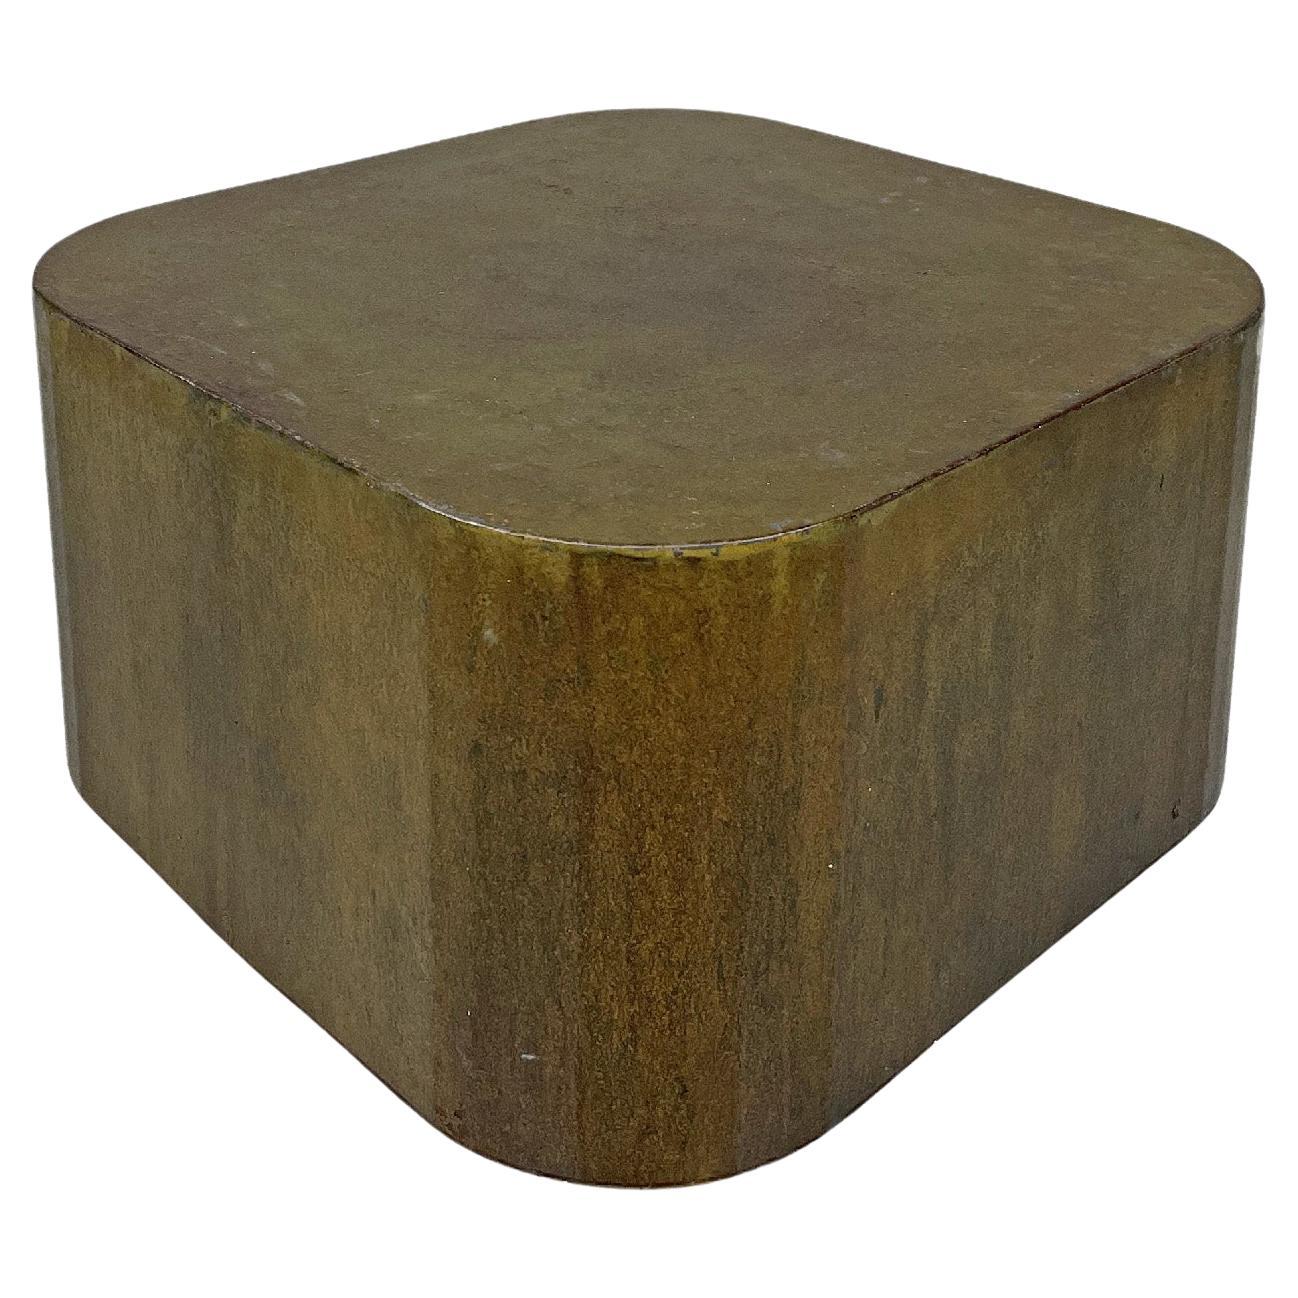 Italian post-modern squared coffee table or pedestal in Corten steel, 2000s